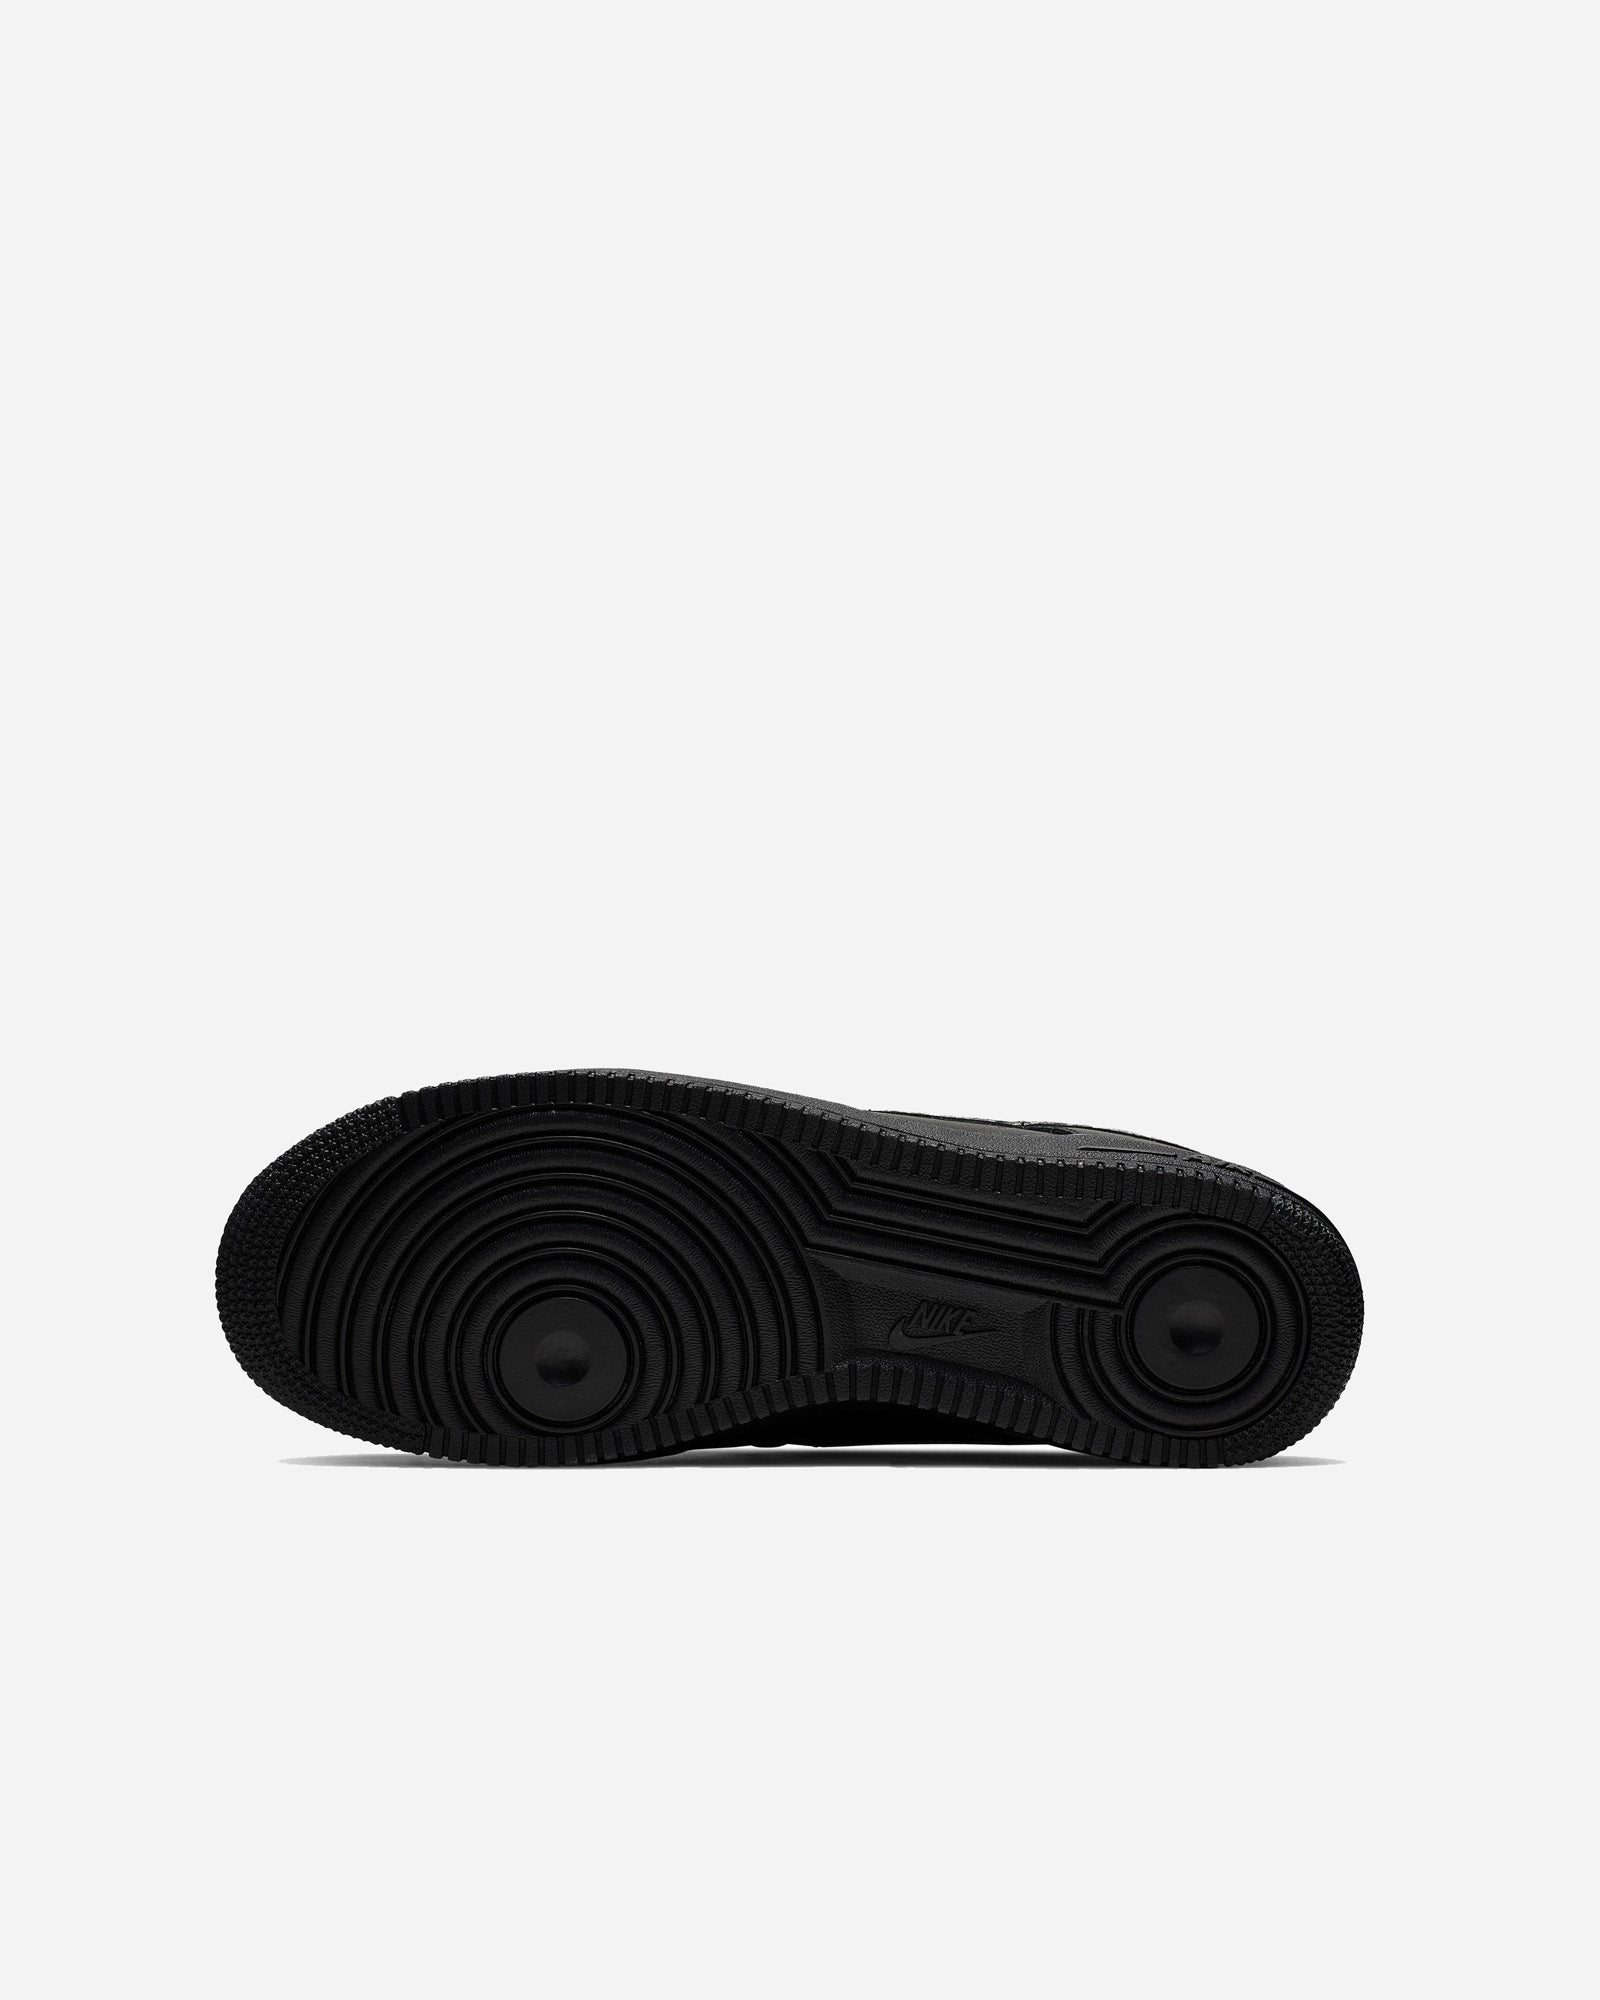 Nike Air Force 1 QS "Black & White" image